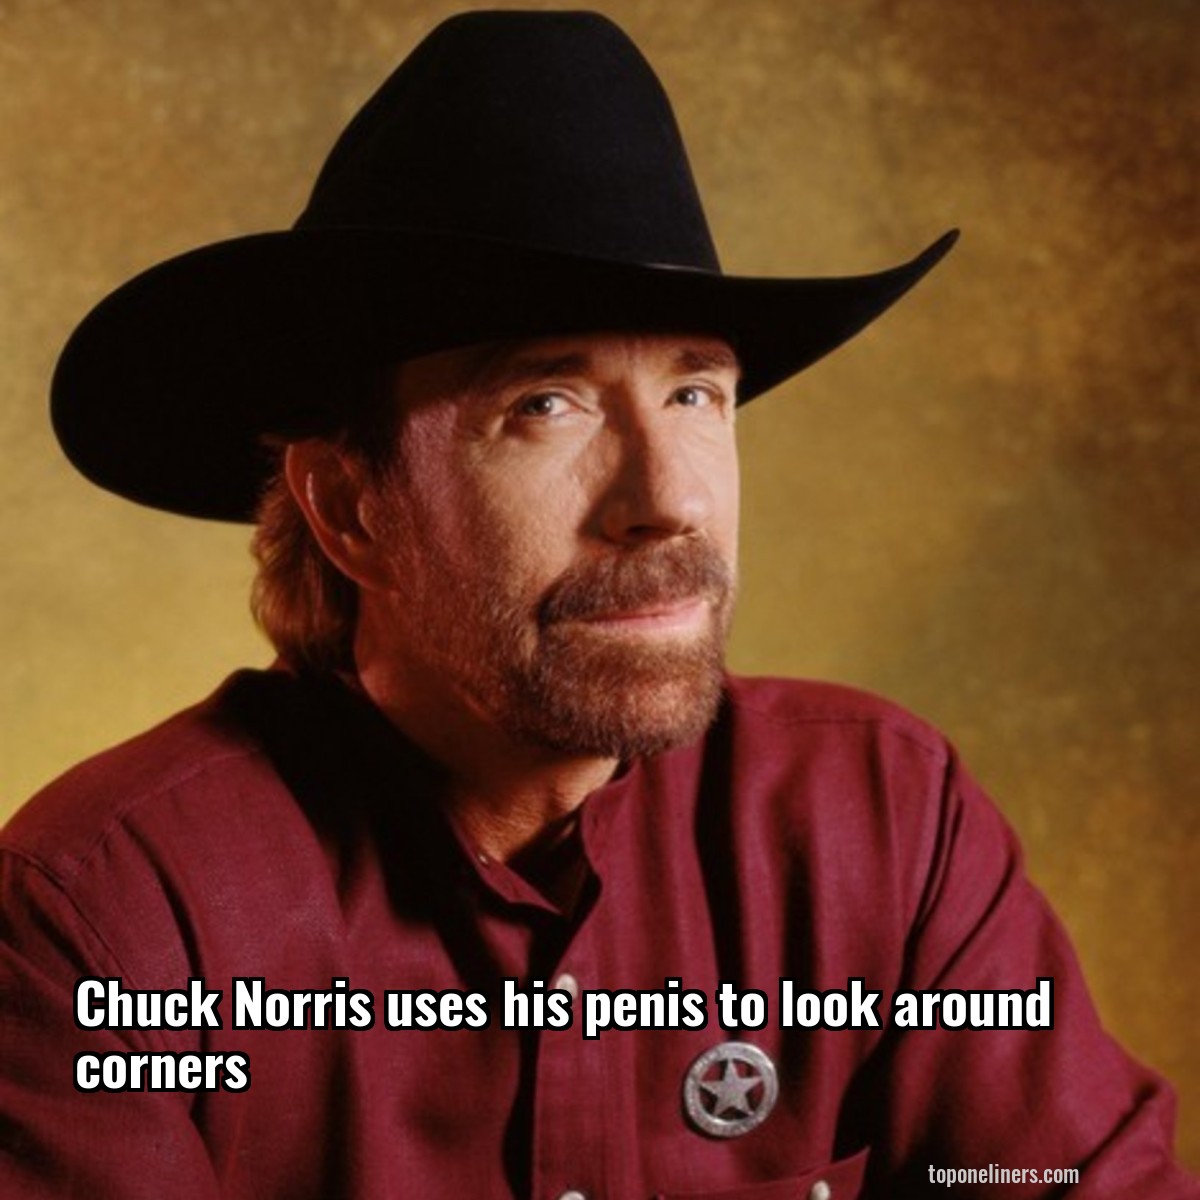 Chuck Norris uses his penis to look around corners